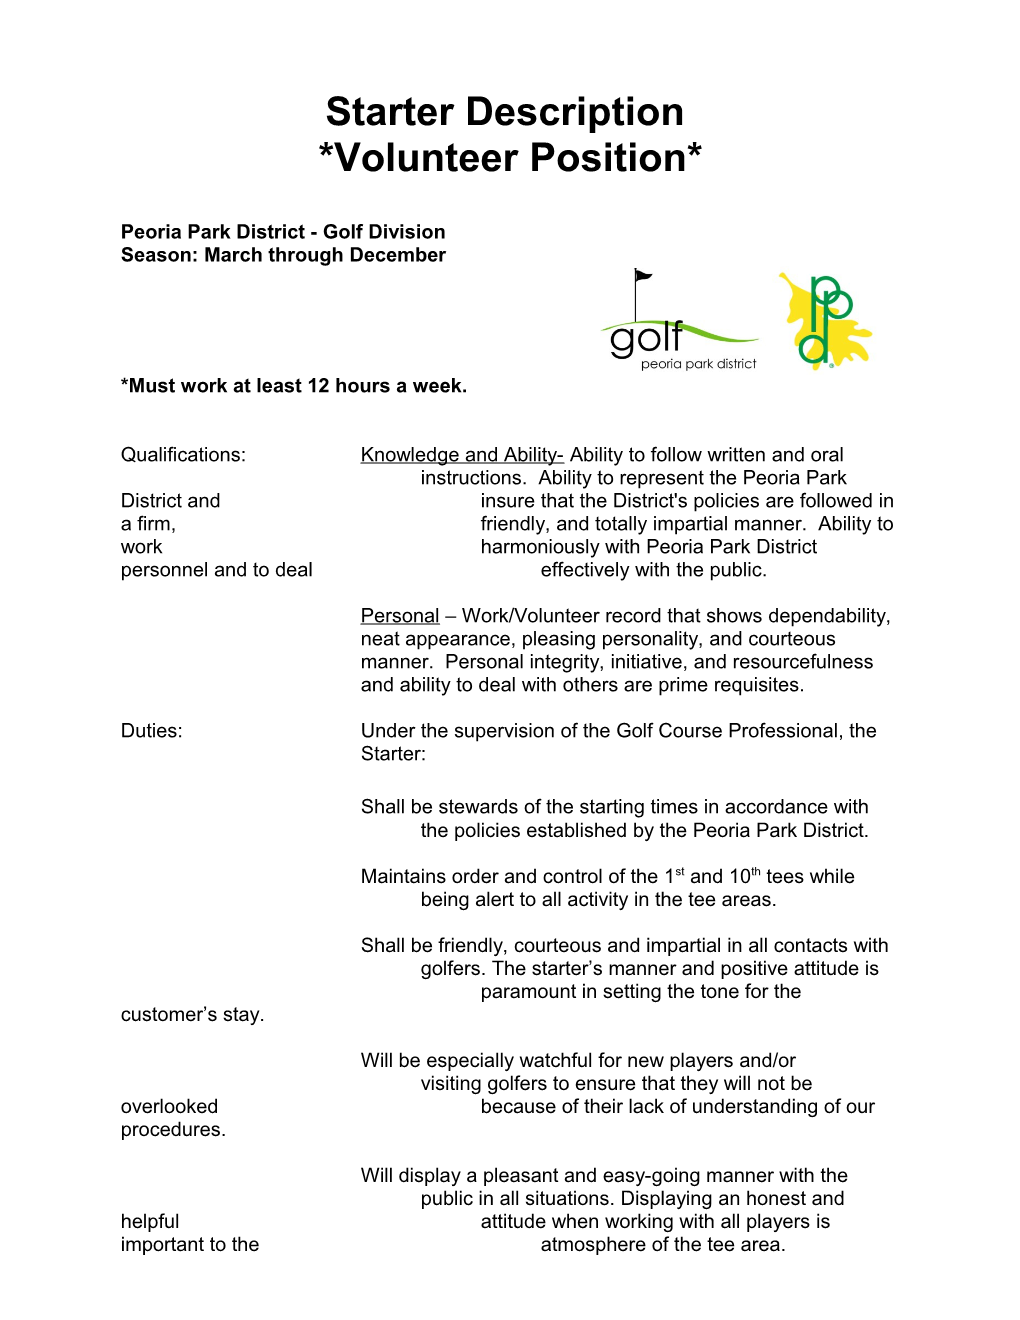 *Volunteer Position*